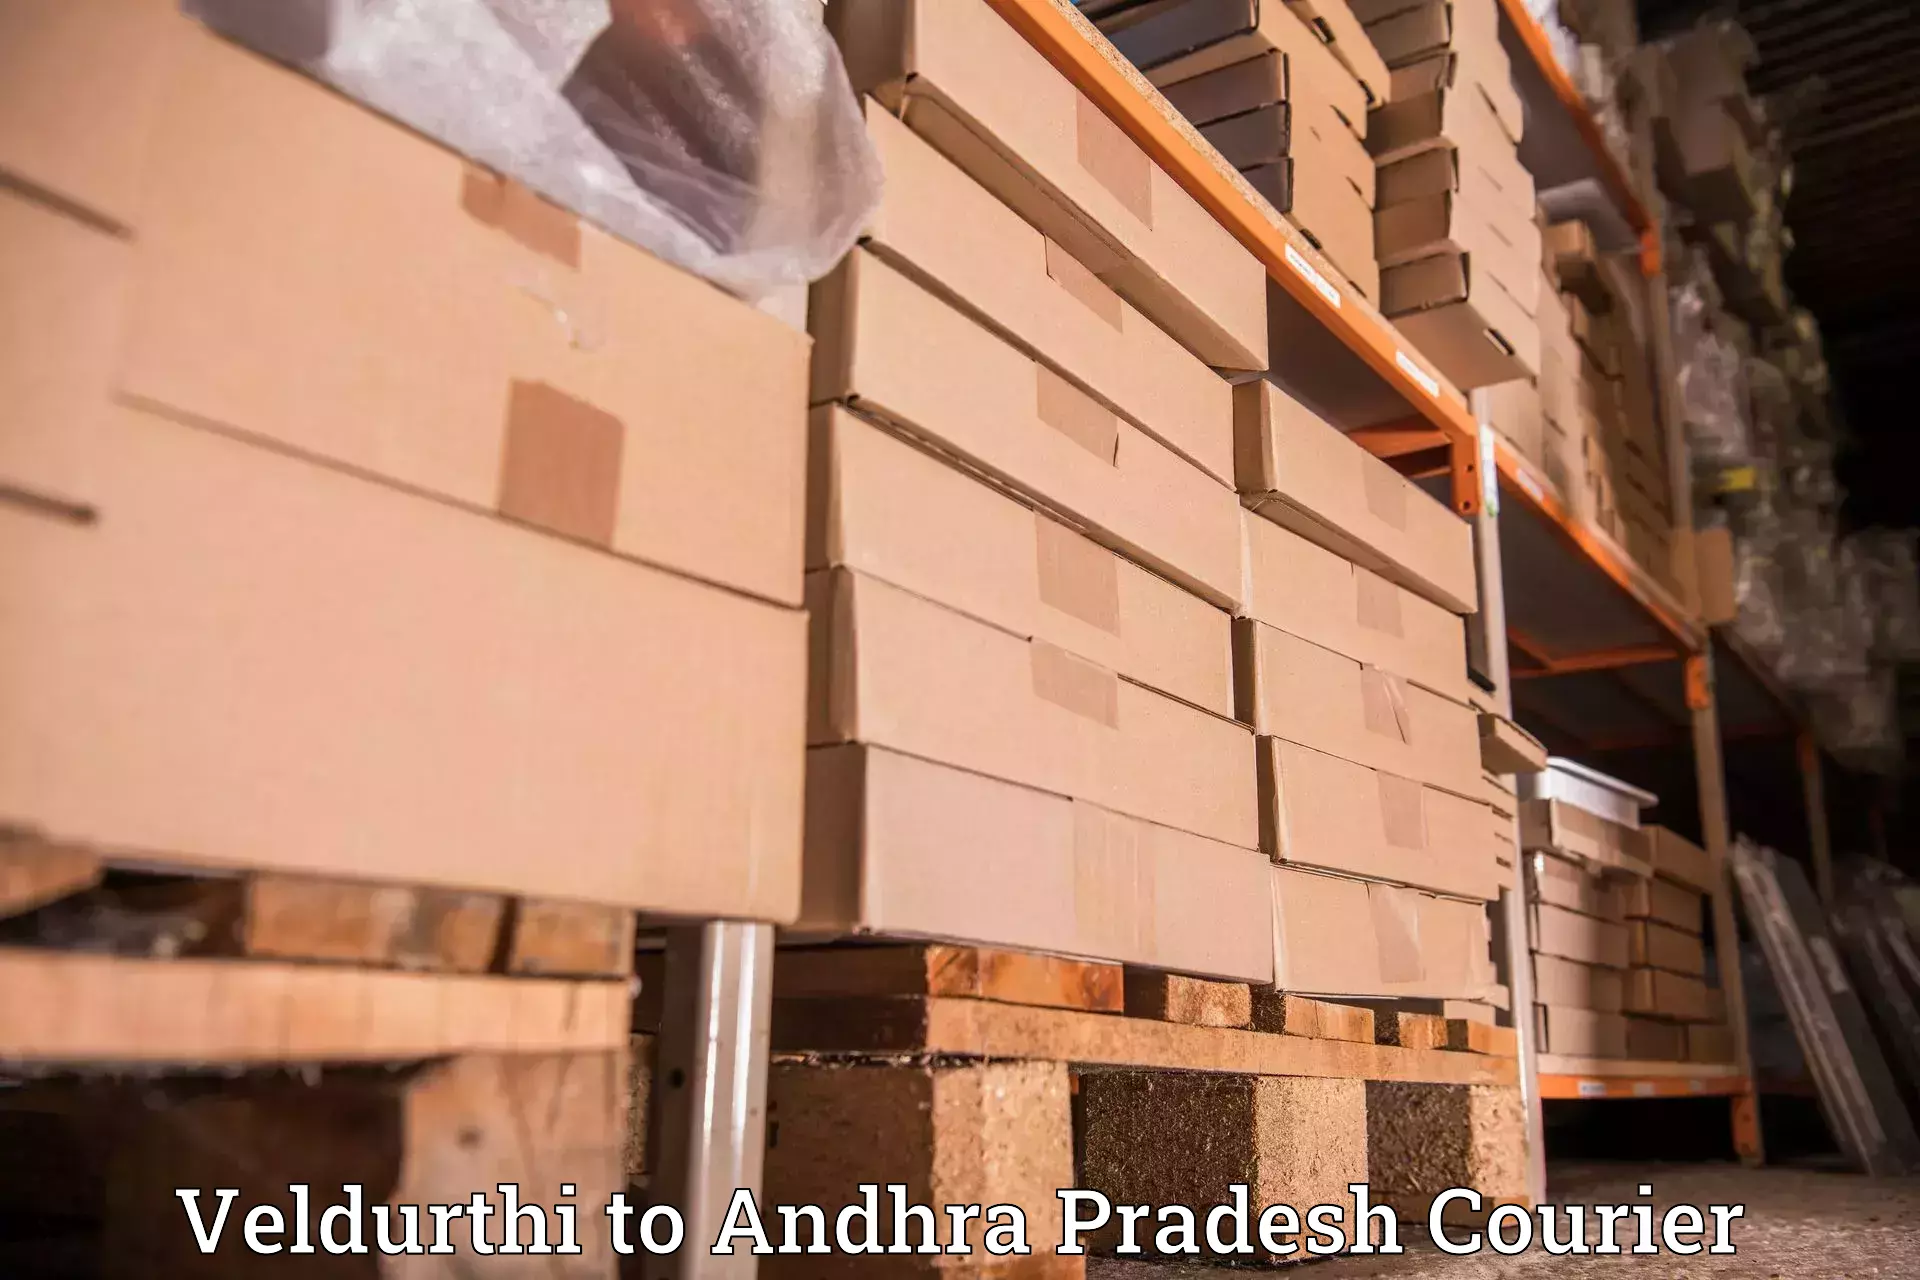 Courier service innovation in Veldurthi to Devarapalli